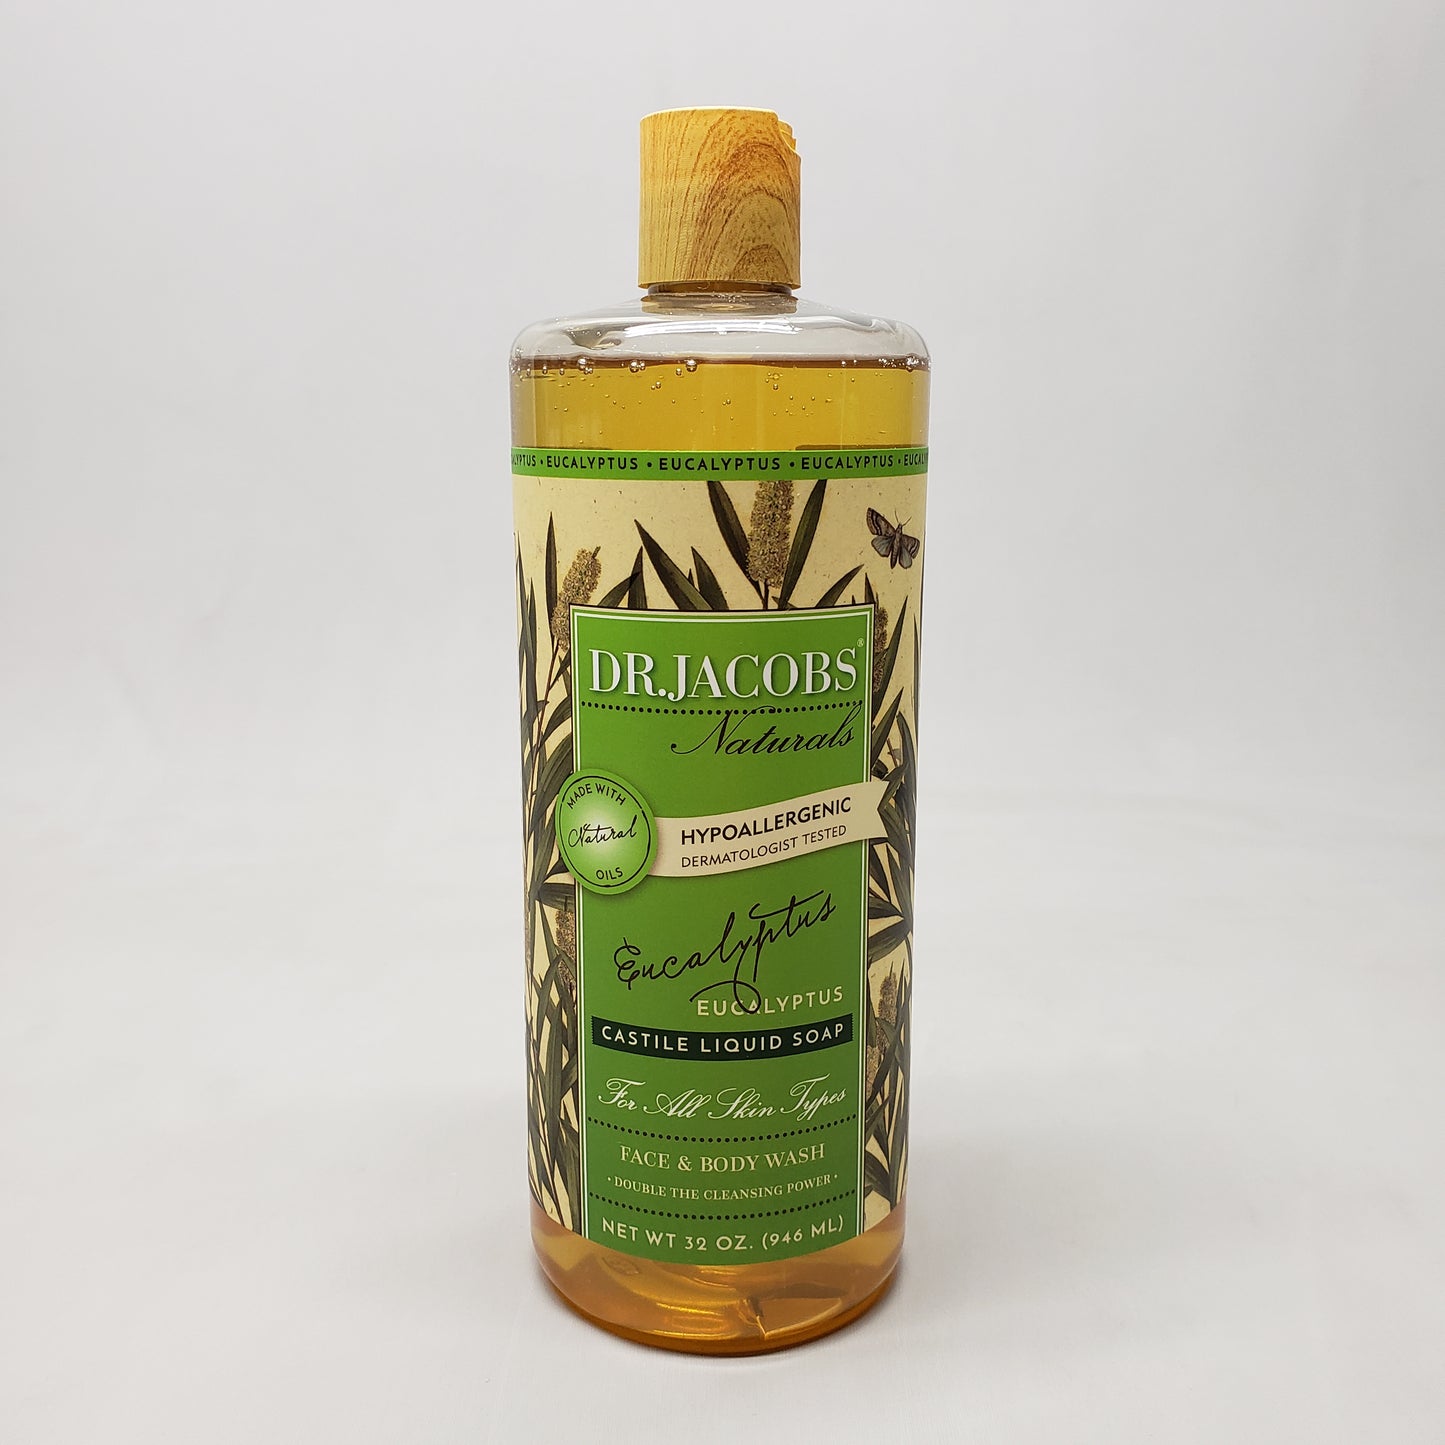 DR. JACOBS NATURALS Eucalyptus Castile Liquid Soap 32 oz Hypoallergenic (New)